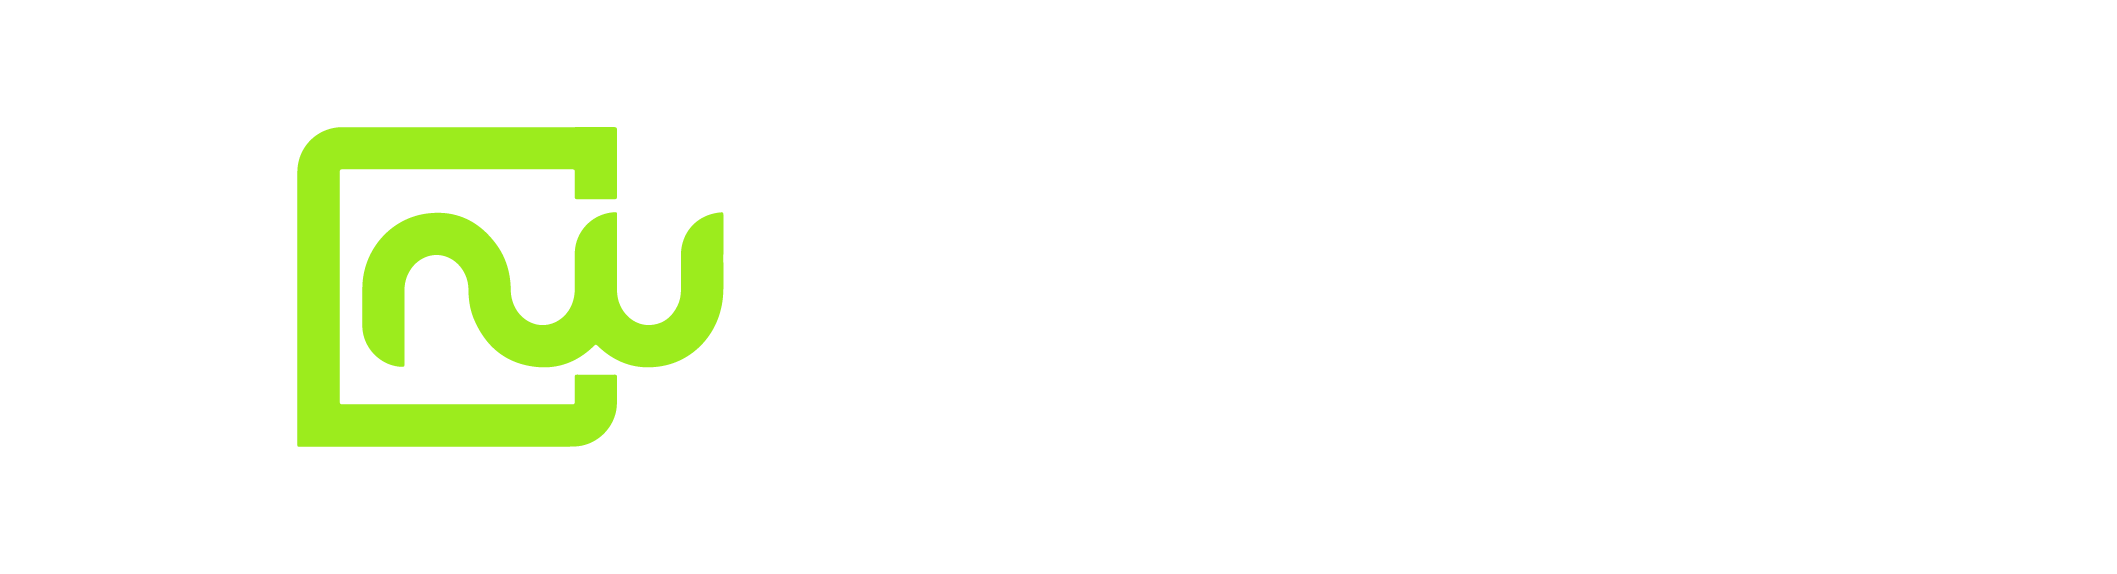 Northwest Contents